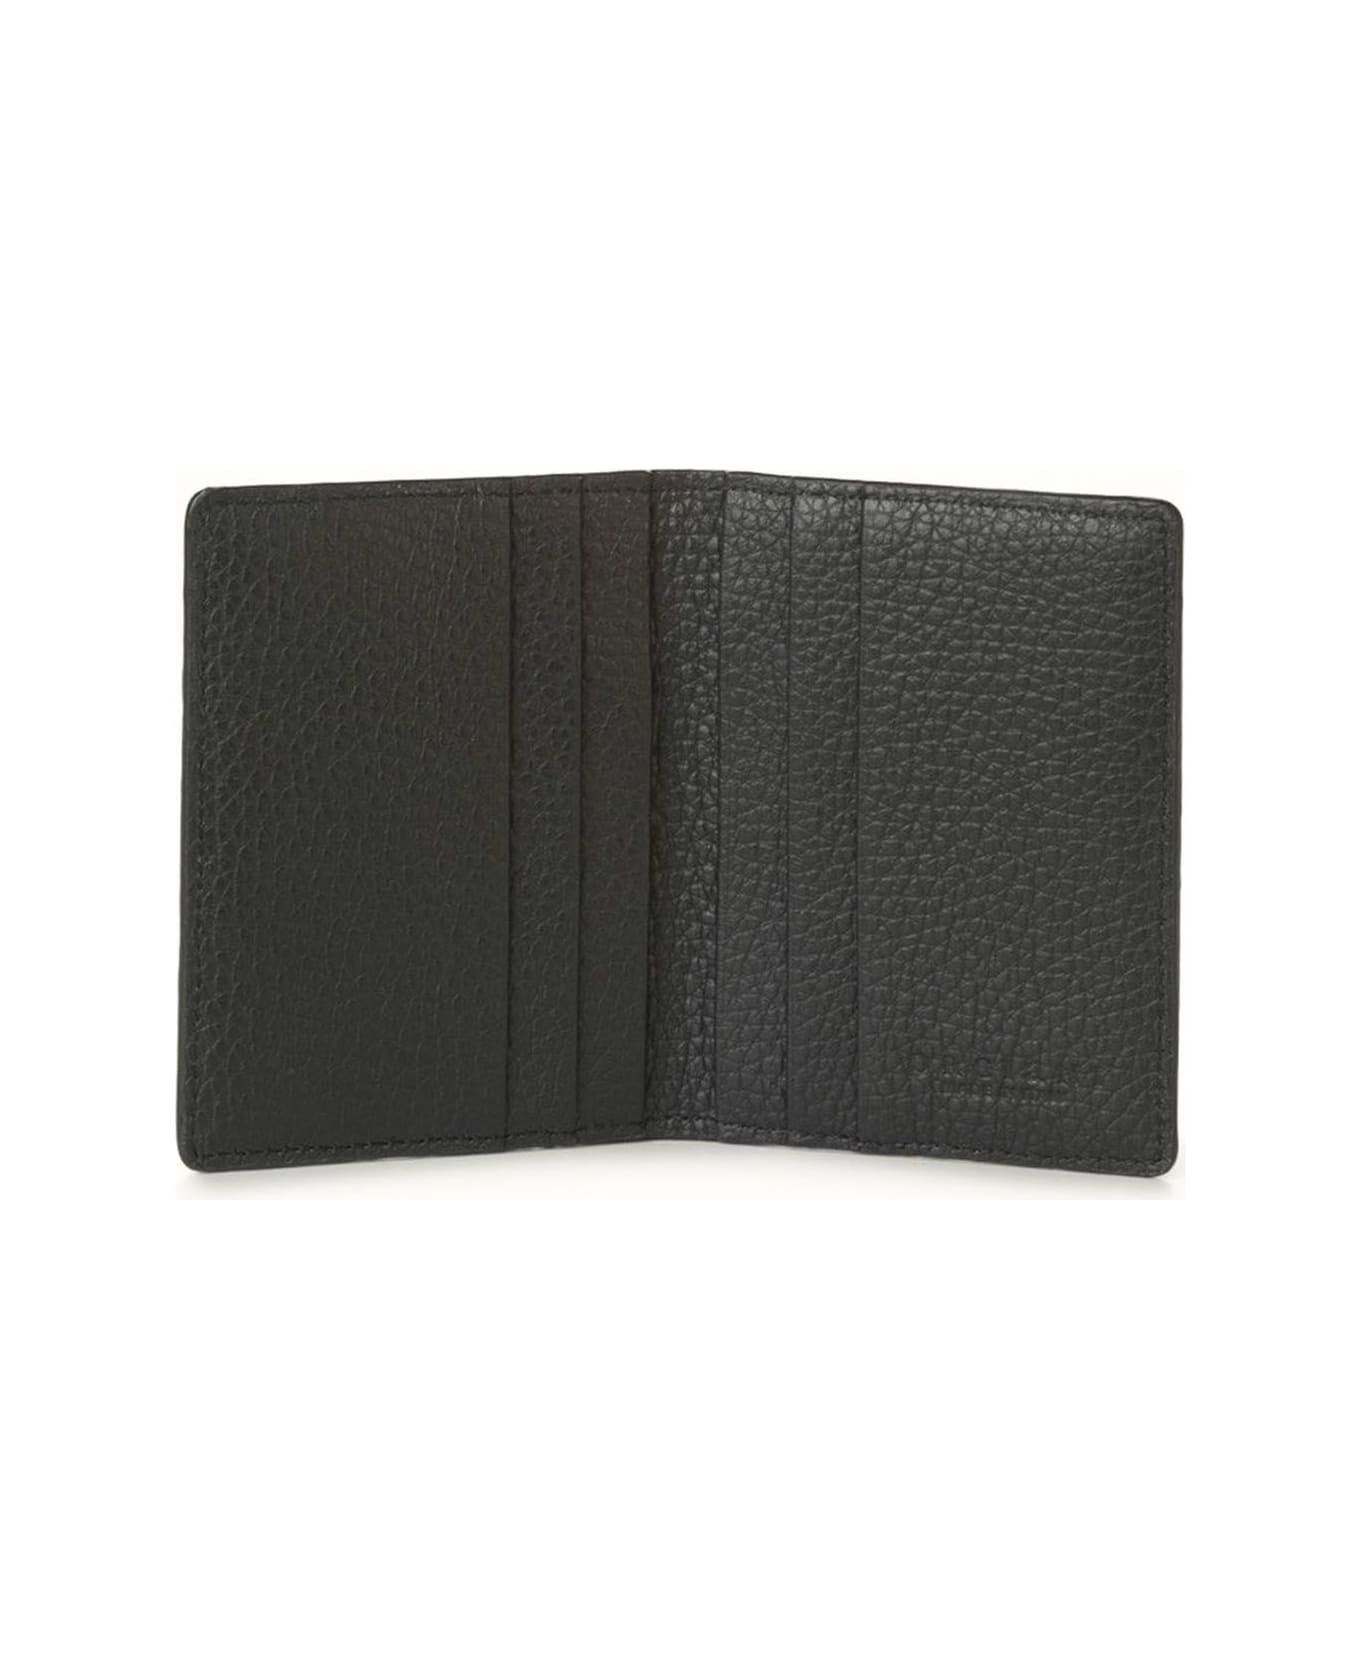 Orciani Micron Hinge Opening Leather Card Holder - Black